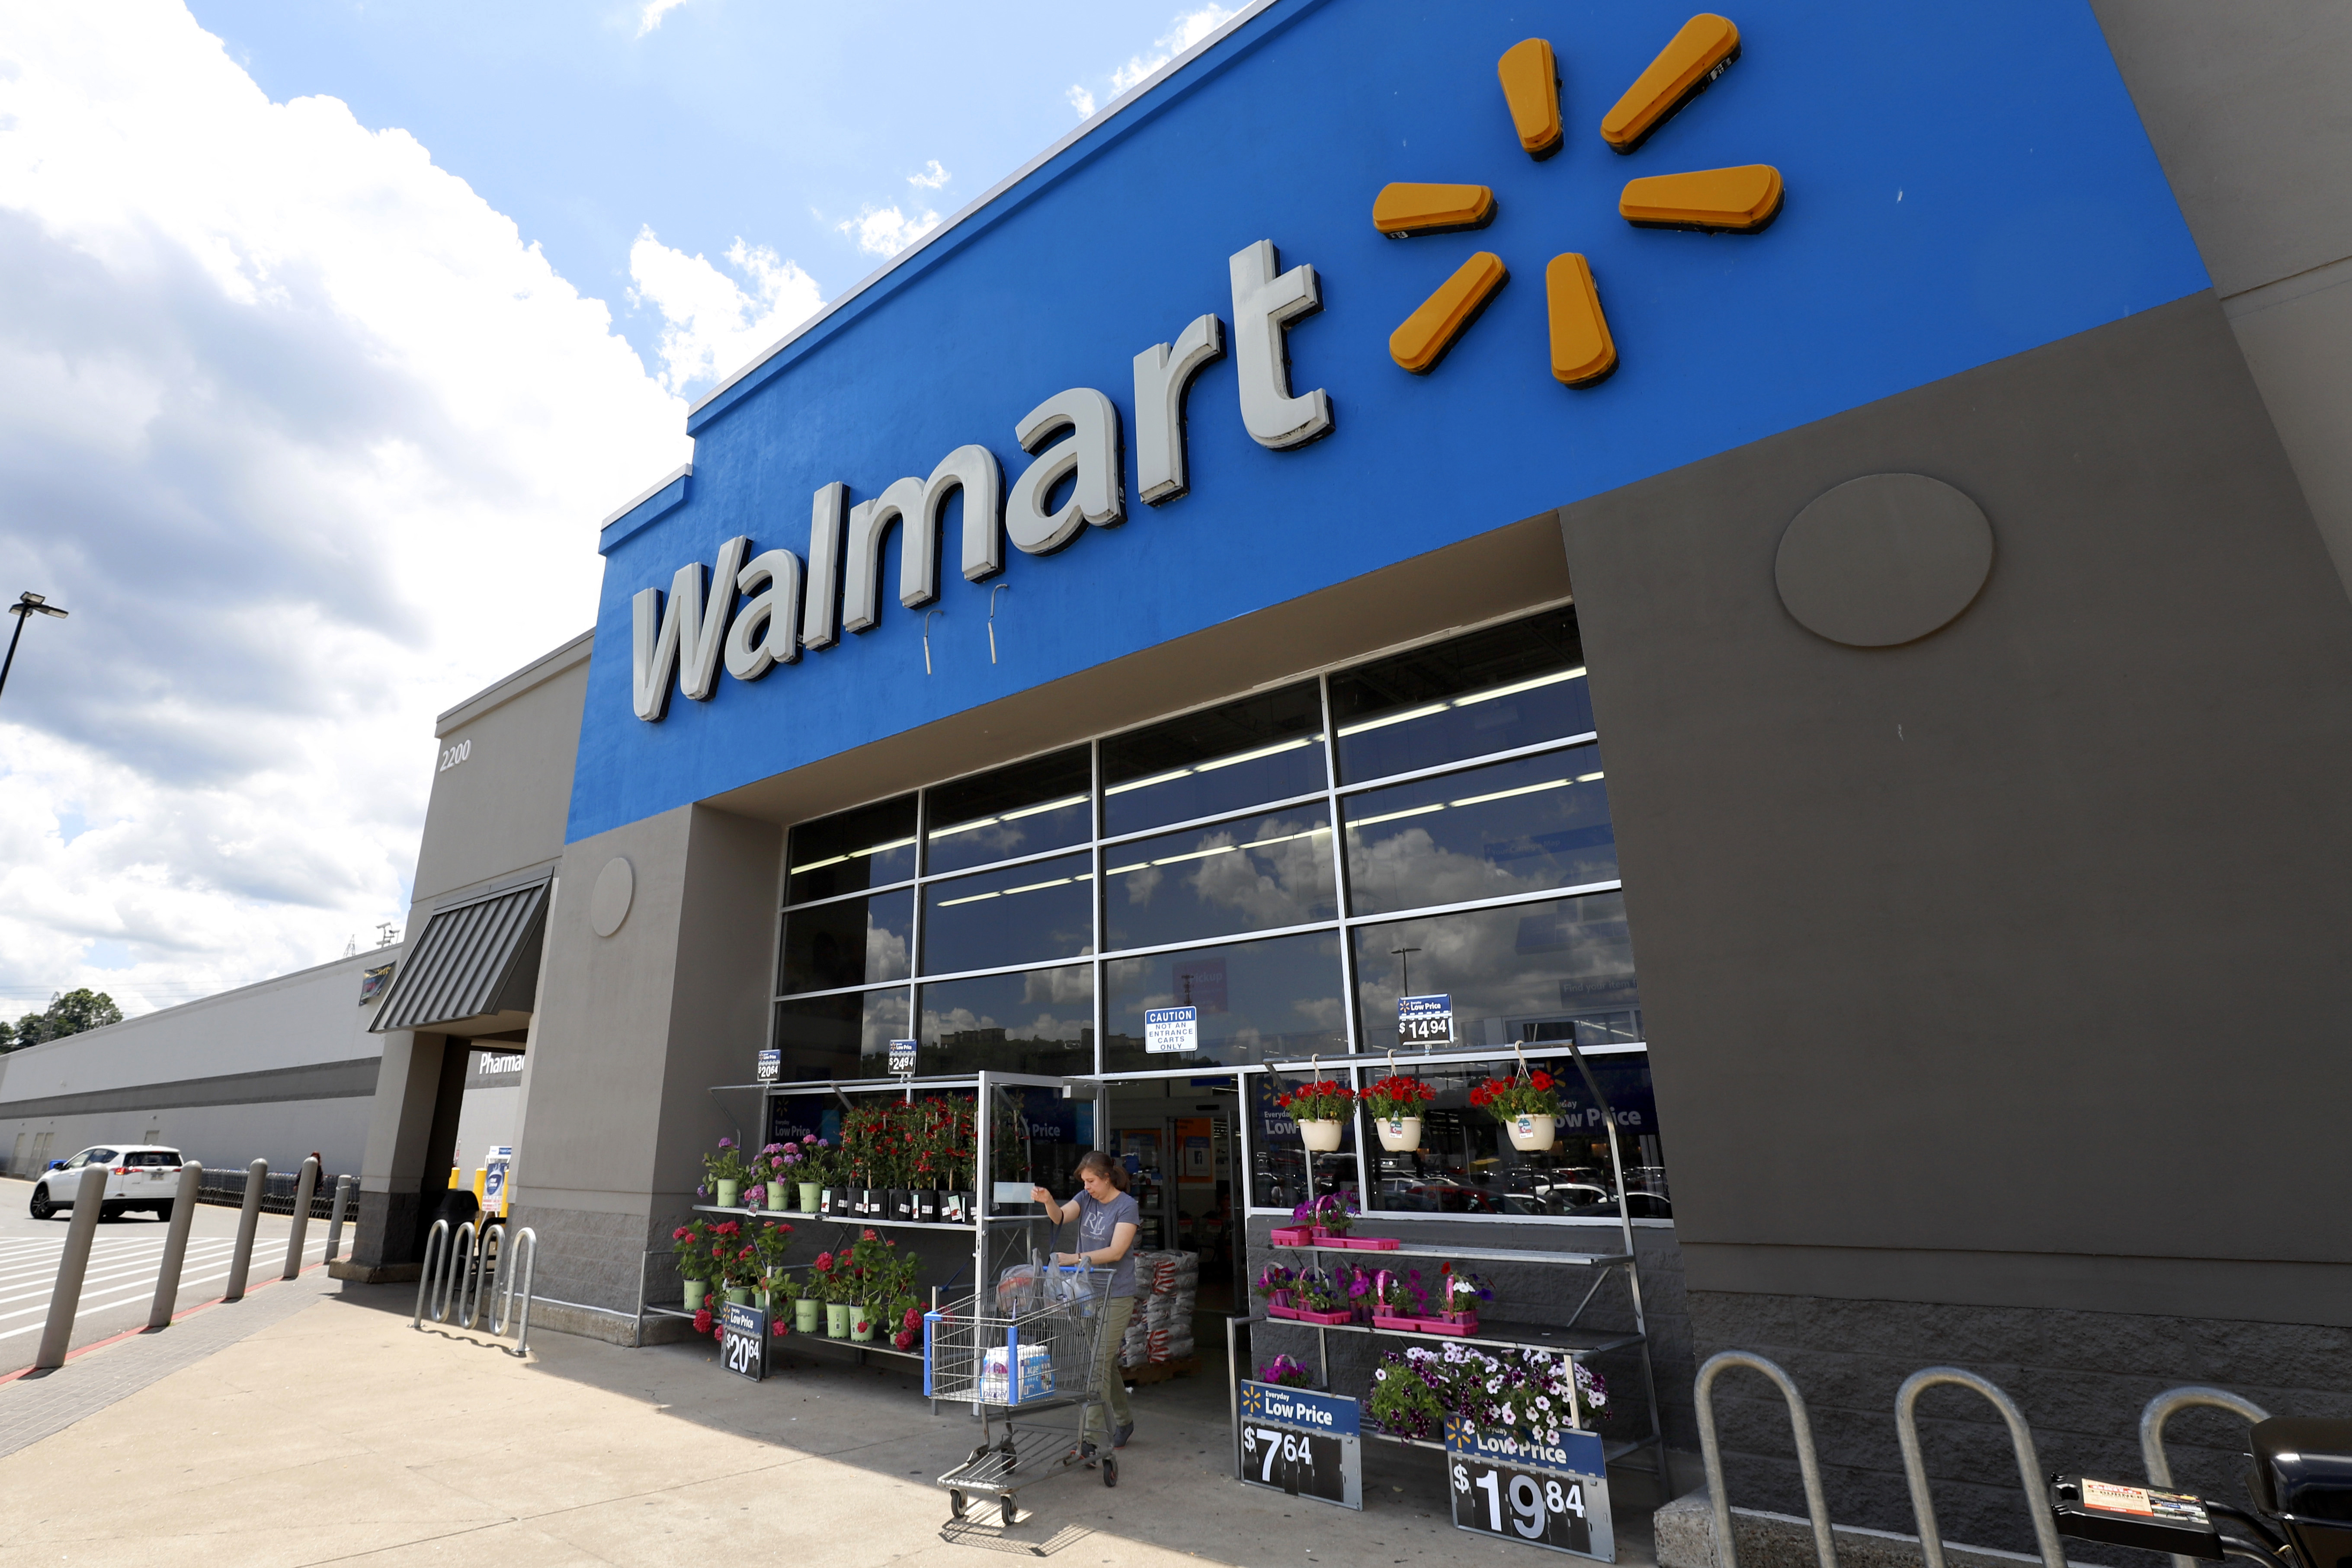 Police chief: 3 people killed in Oklahoma Walmart shooting